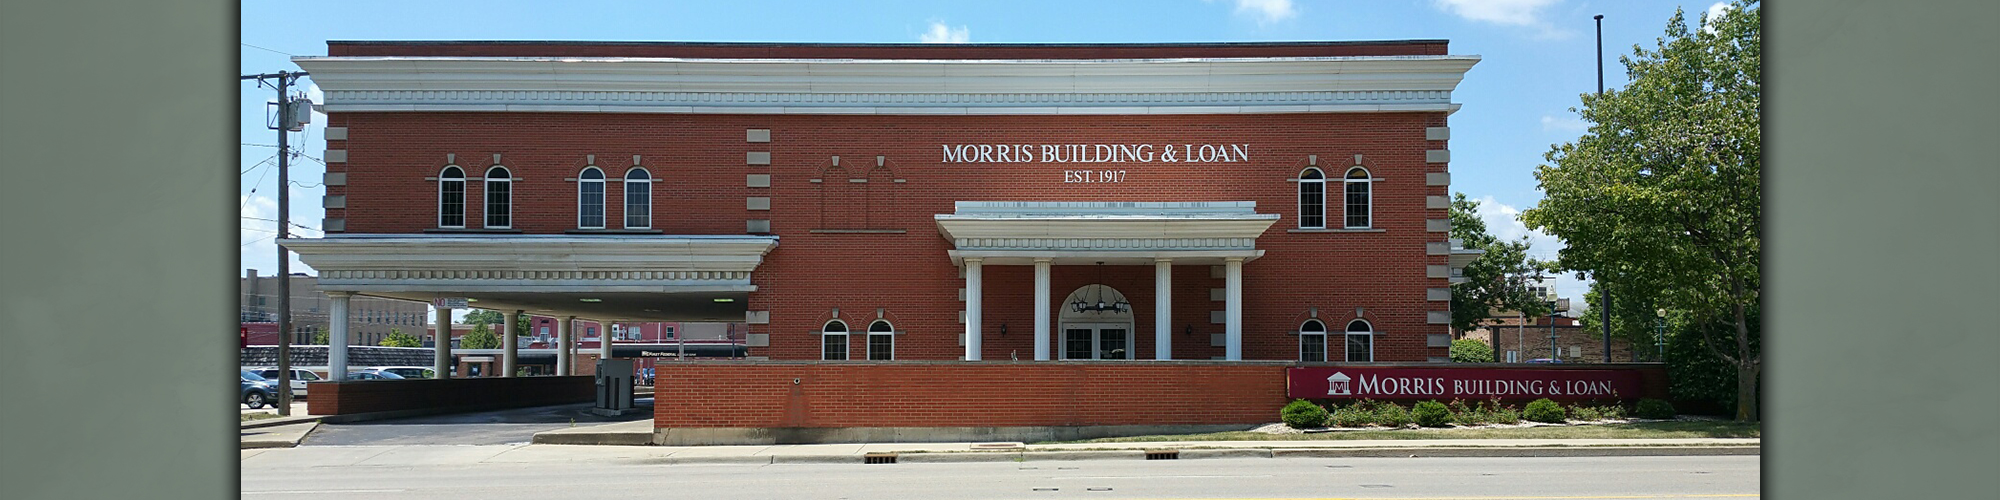 Morris Building